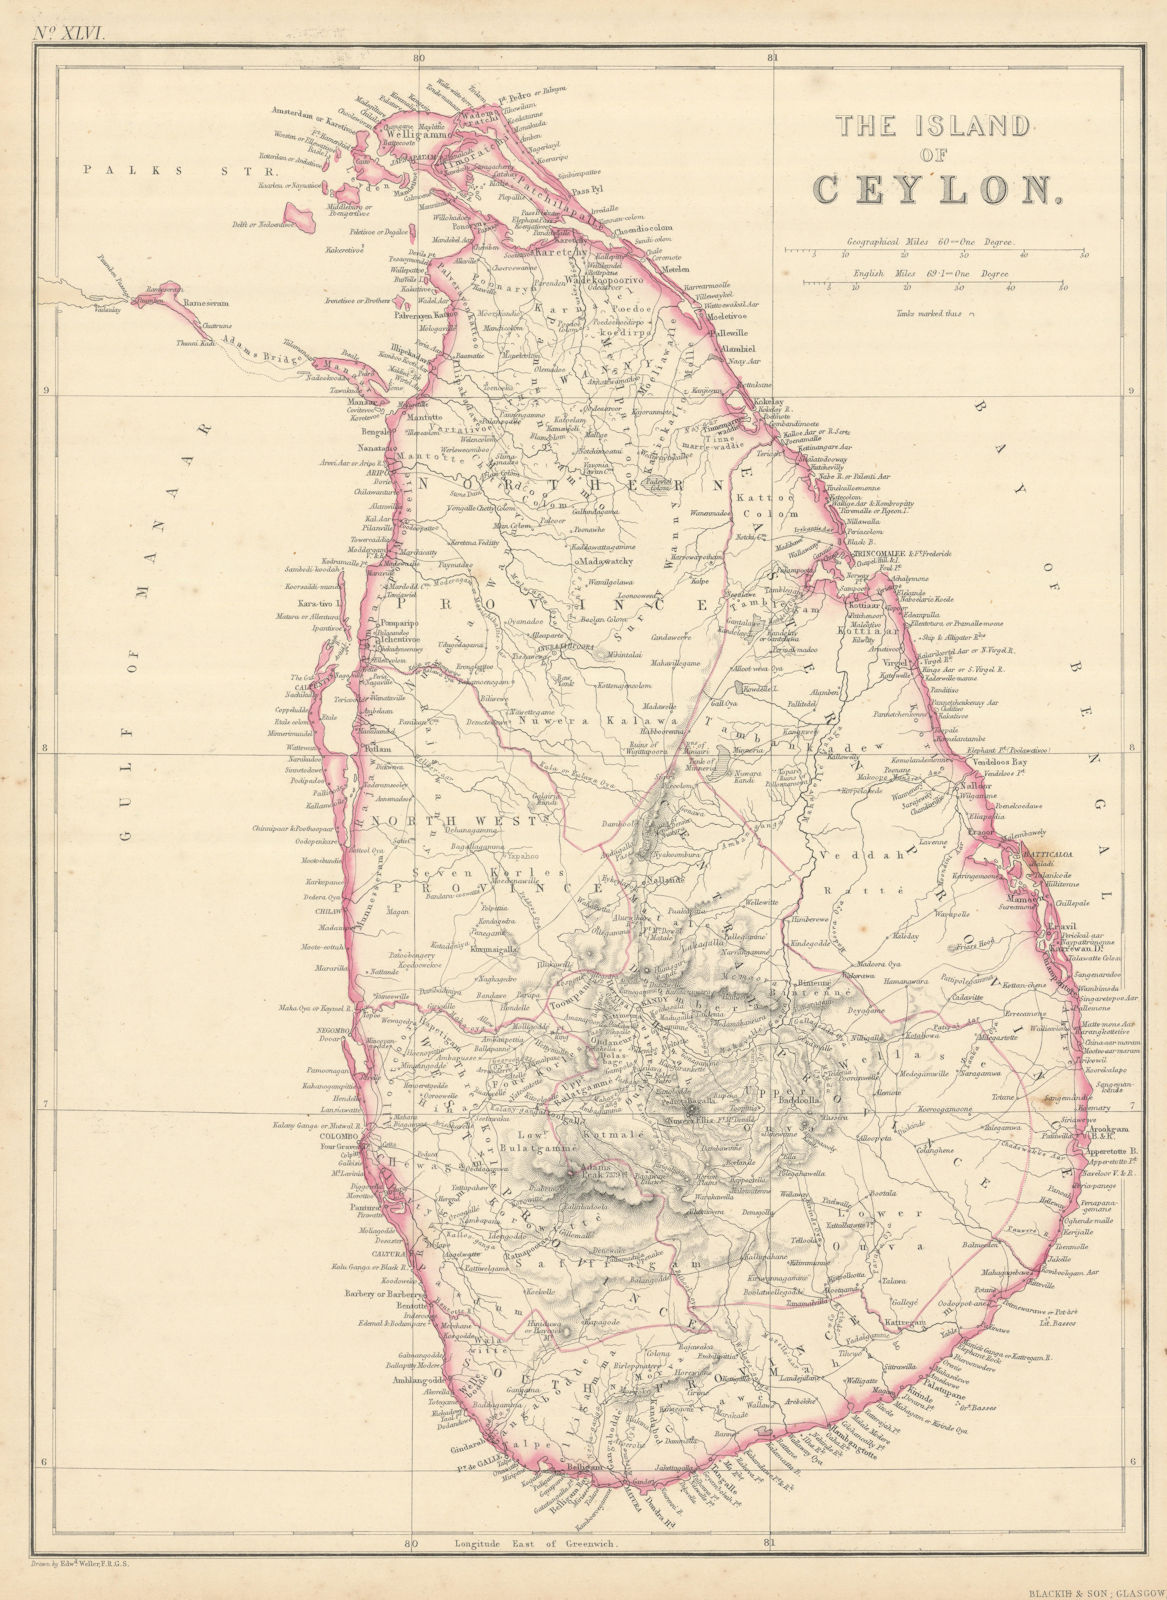 Associate Product The Island of Ceylon by Edward Weller. Sri Lanka 1860 old antique map chart